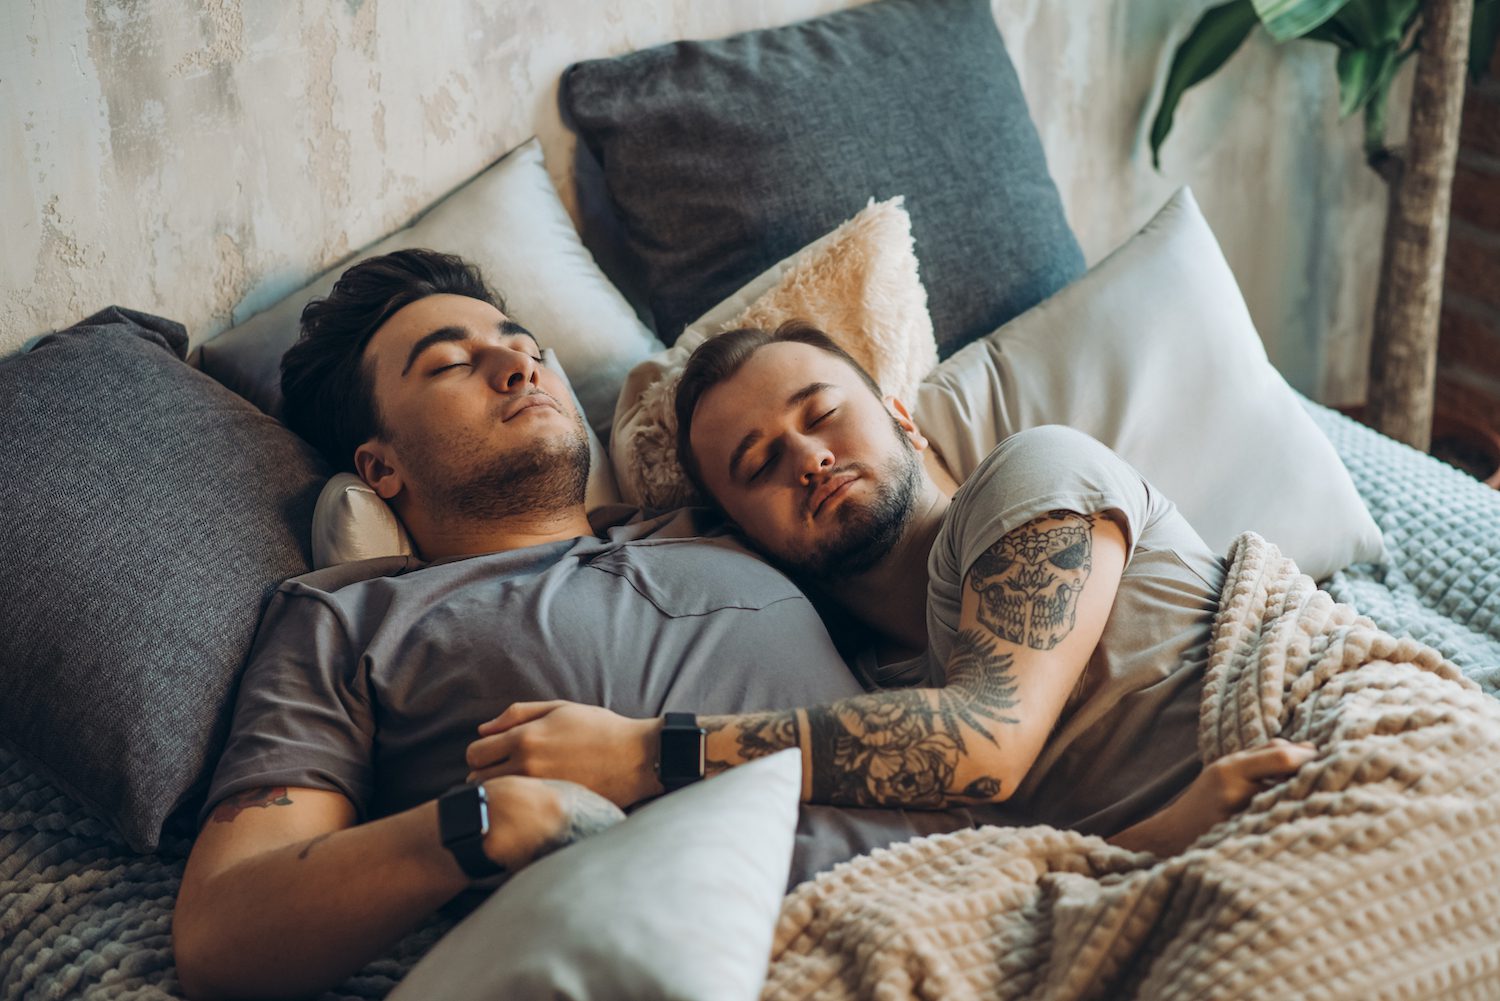 https://www.sleepfoundation.org/wp-content/uploads/2021/08/Common-Sleeping-Positions-for-Couples.jpg